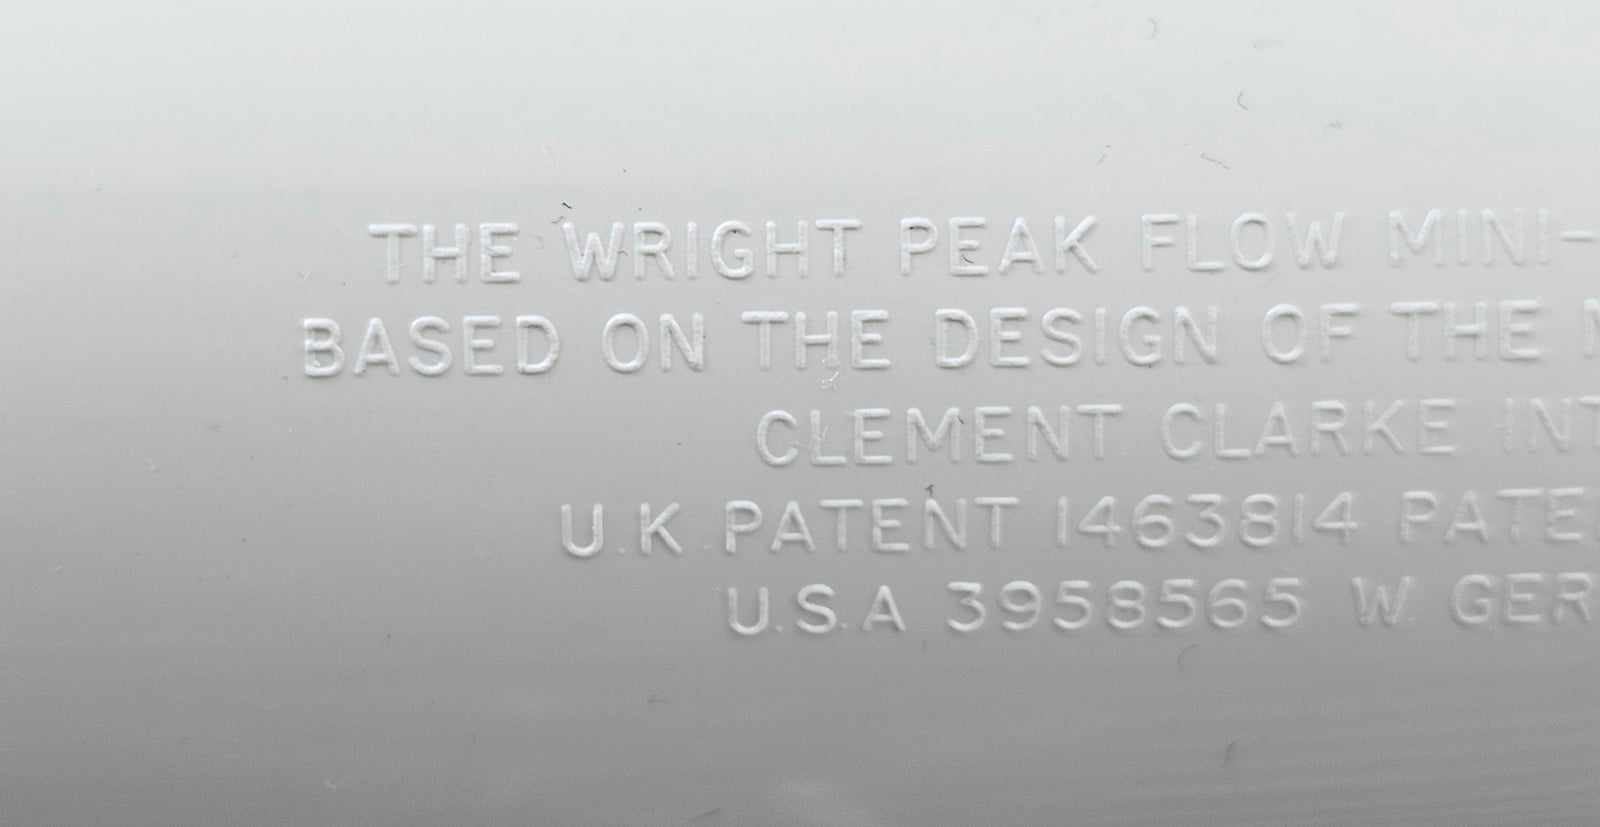 Peakflowmeter, Wright